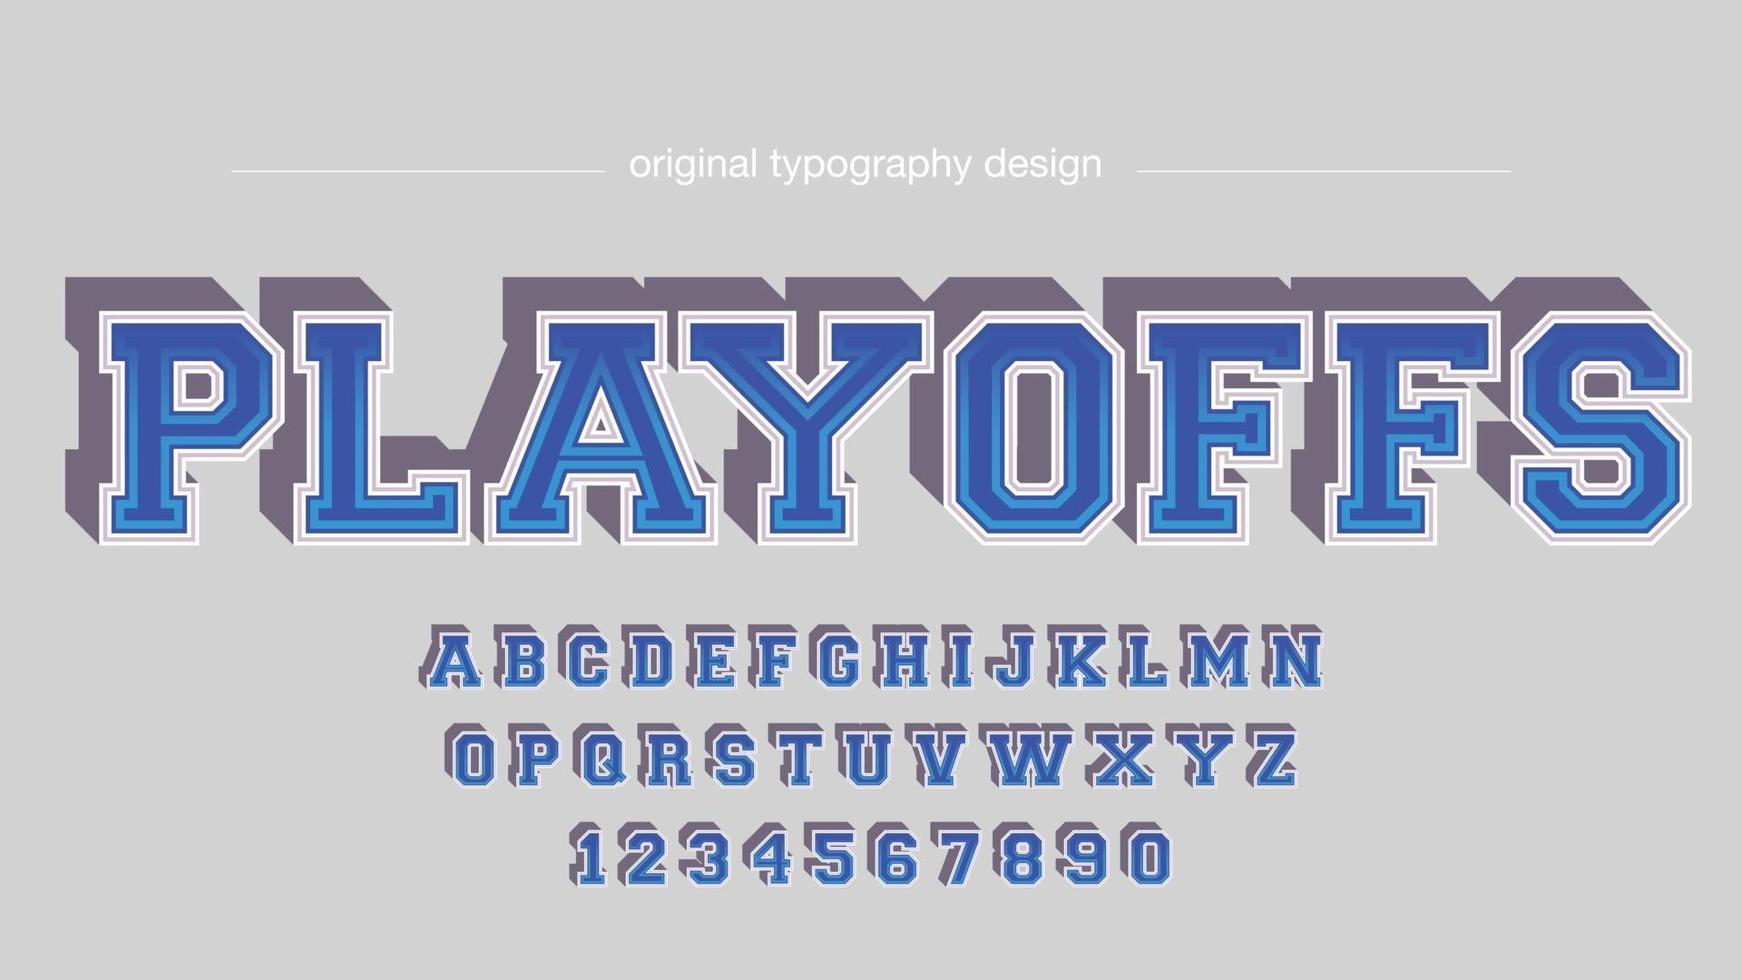 Blue Varsity College 3D Typography vector